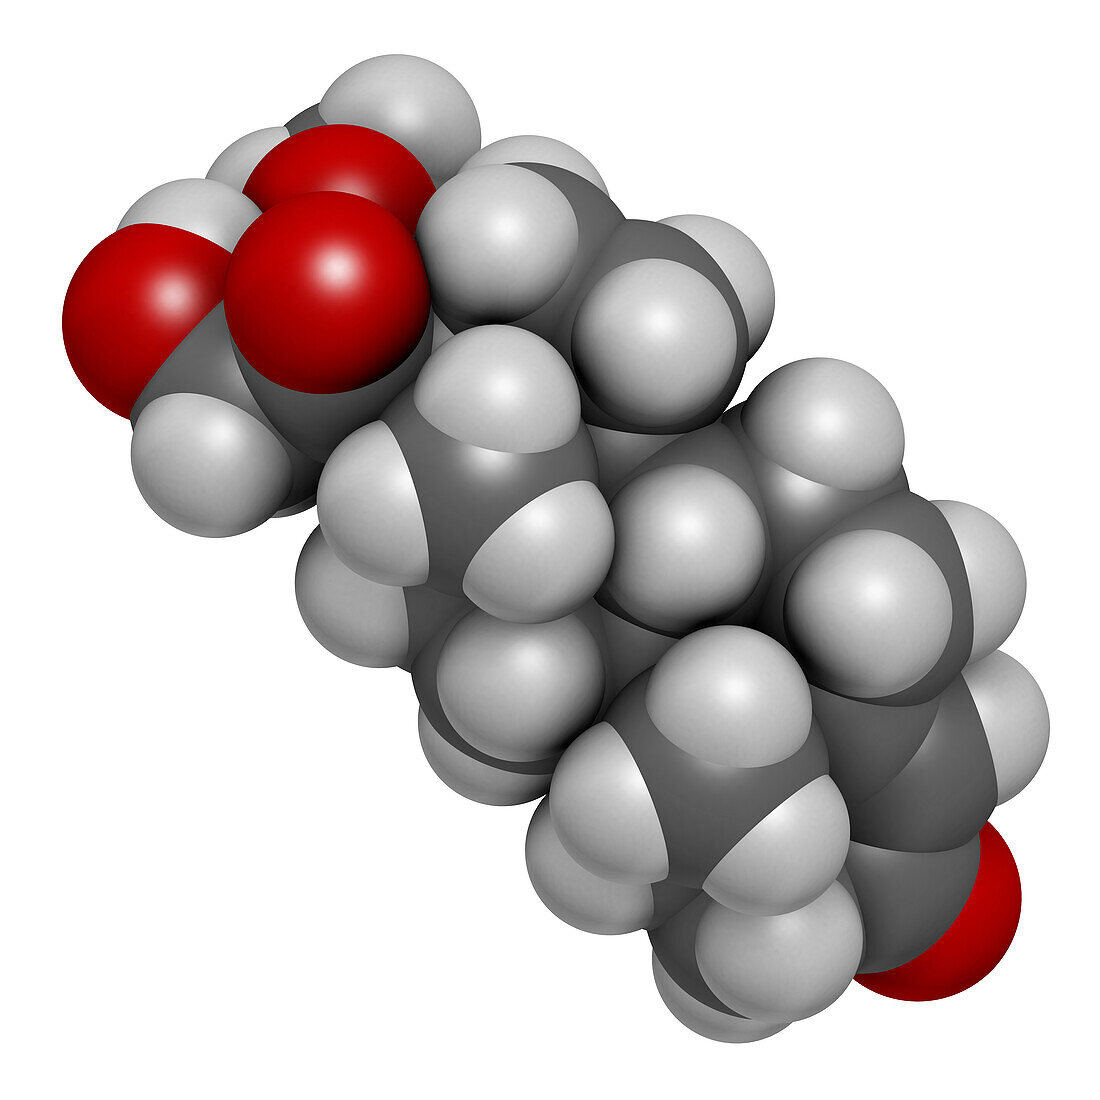 Clascoterone drug molecule, illustration